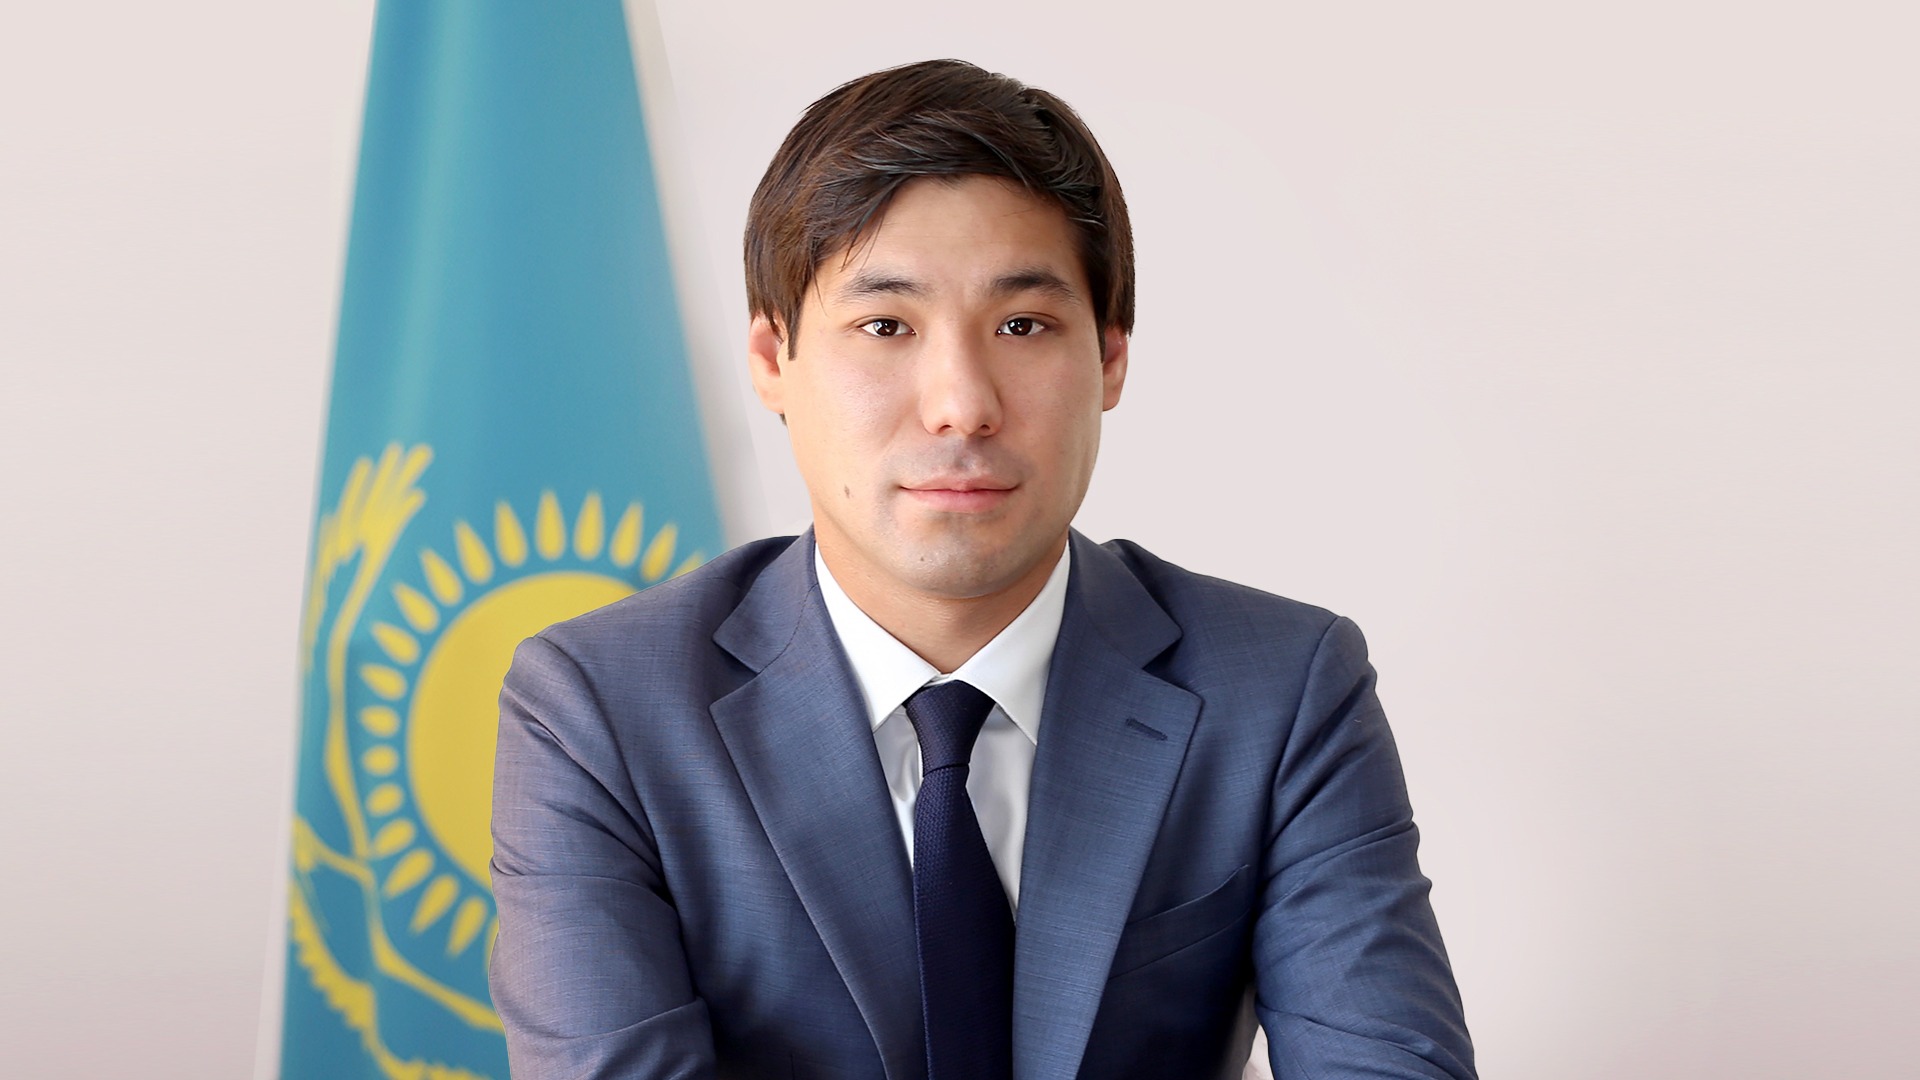 сын министра казахстана вышел замуж за азербайджанского тенора